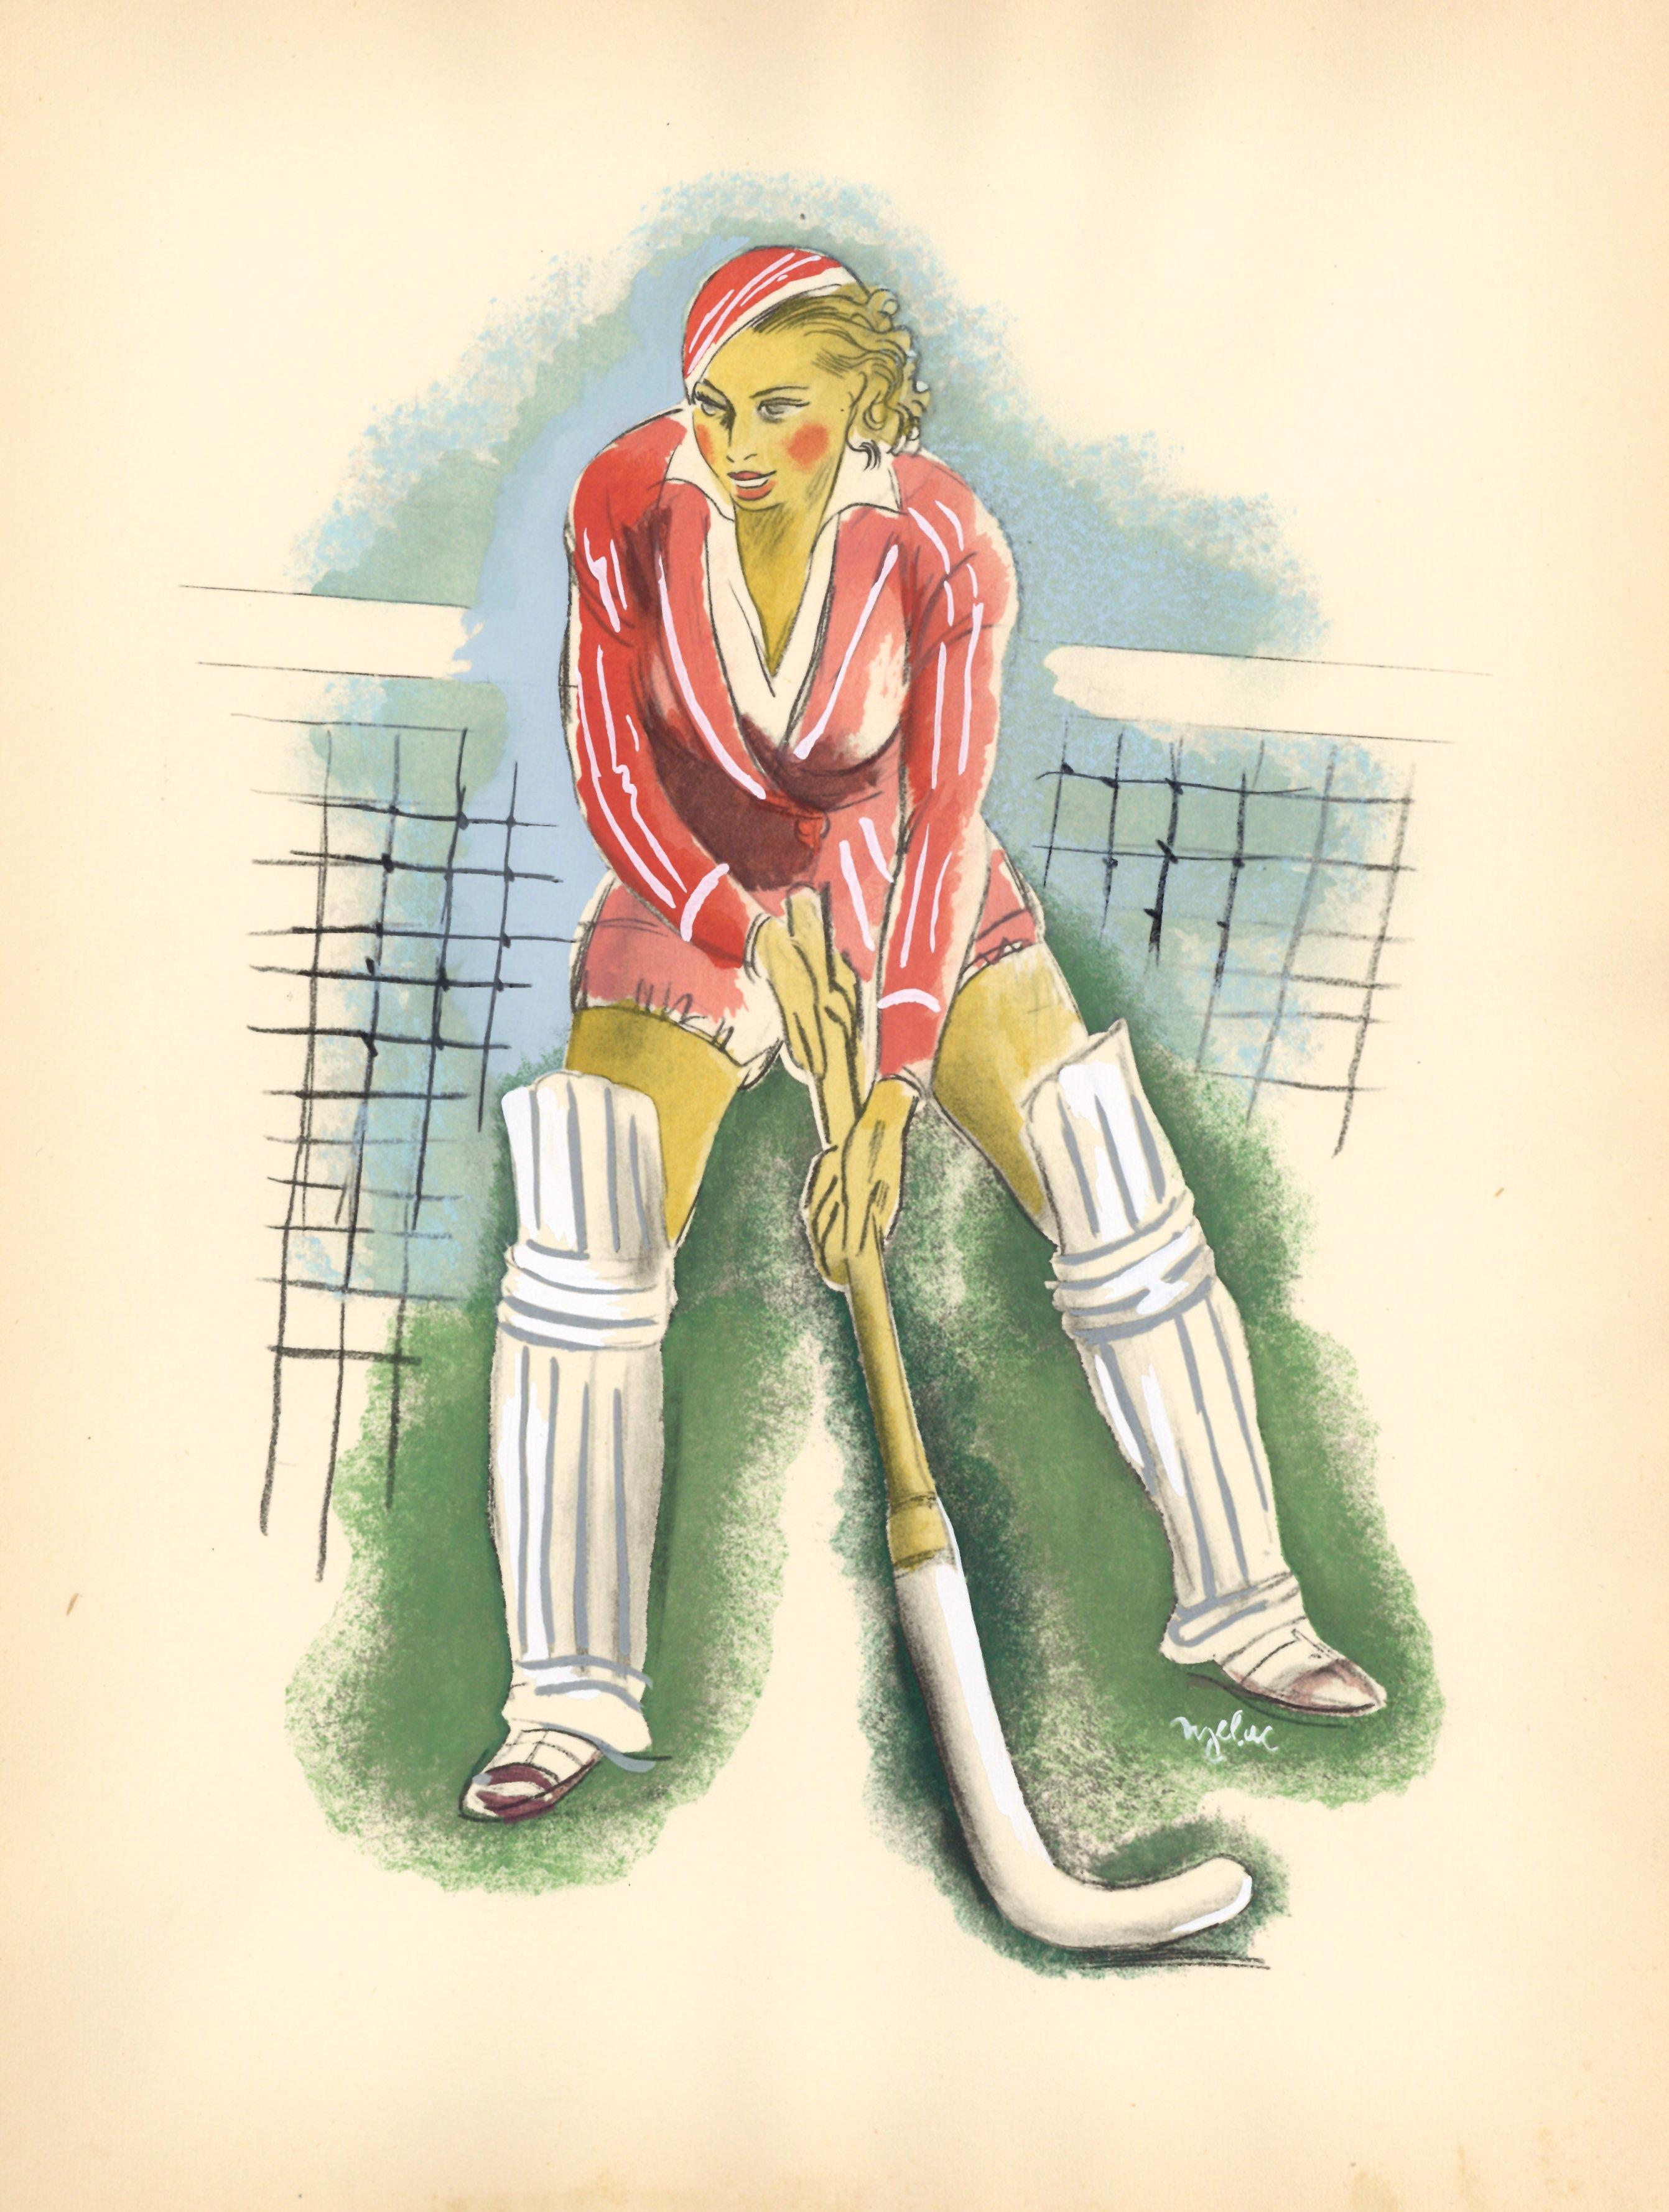 "Le Hockey" pochoir for Les Joies du Sport - Print by Milivoy Uzelac